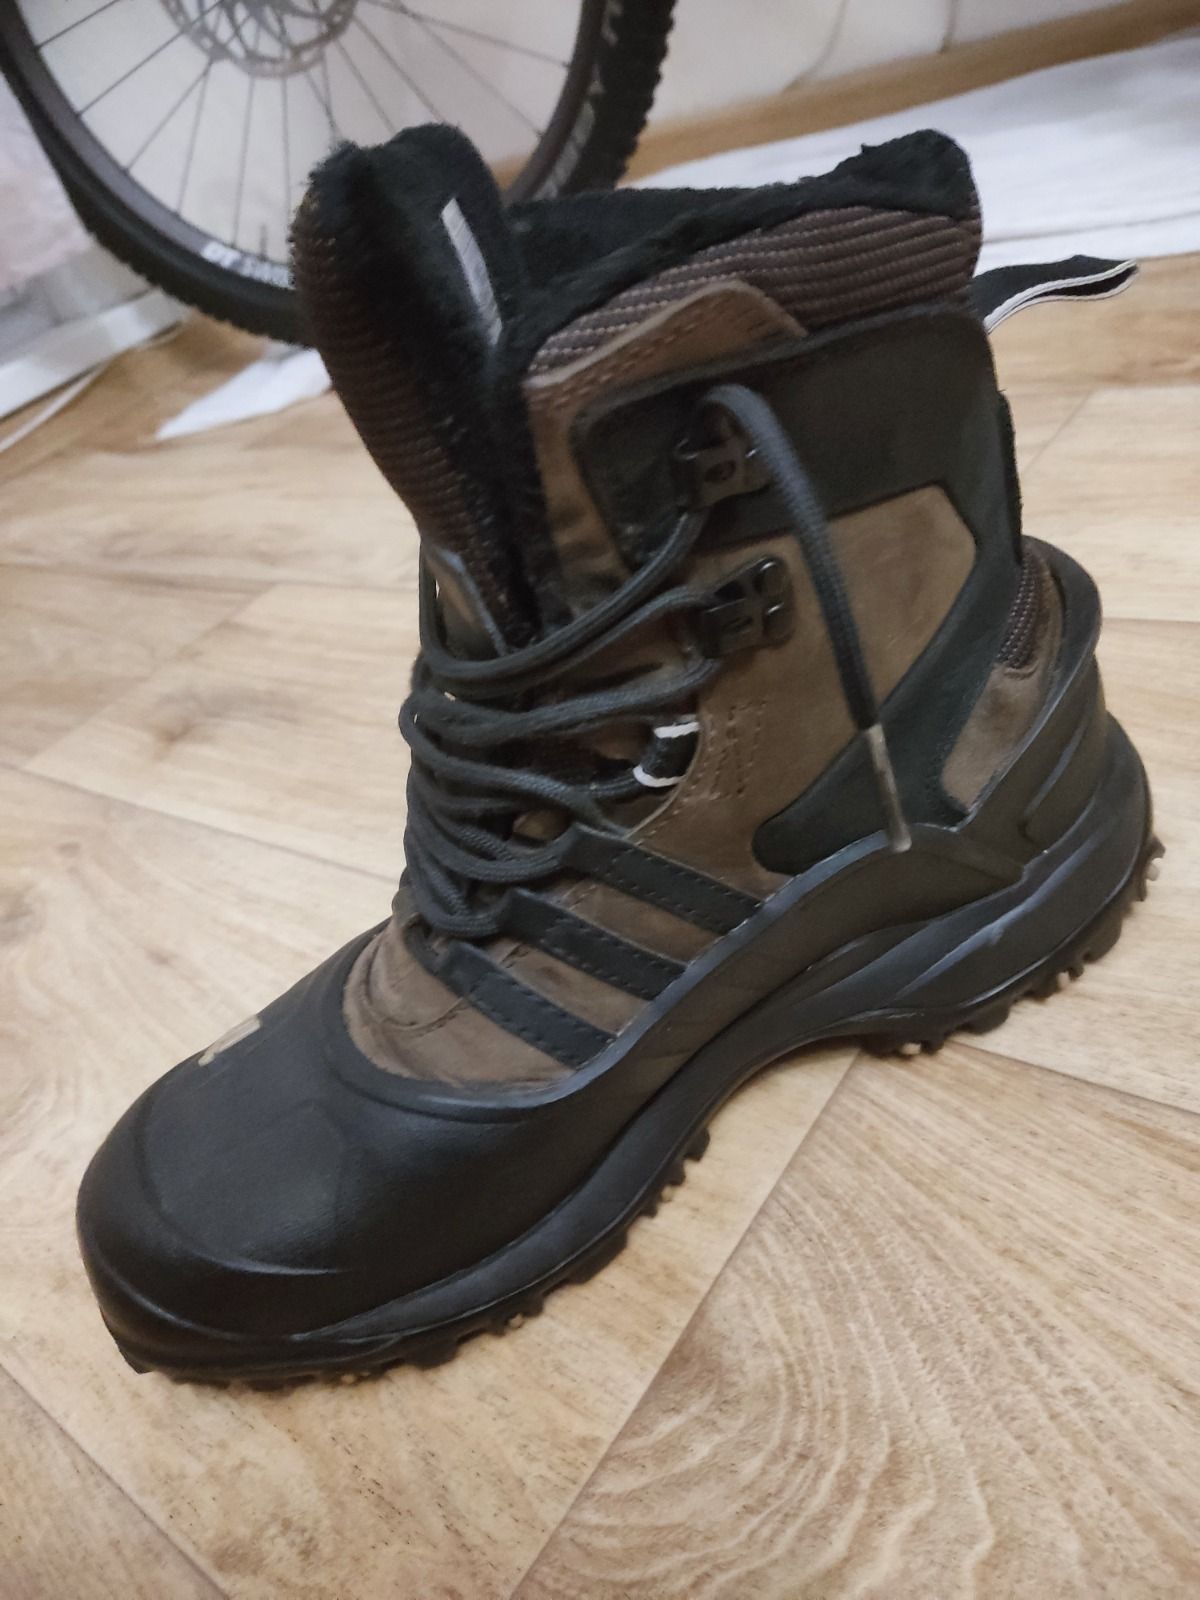 Трекк ботинки осень-зима-весна Adidas Holtanna Boot CP (р-р 42-43)